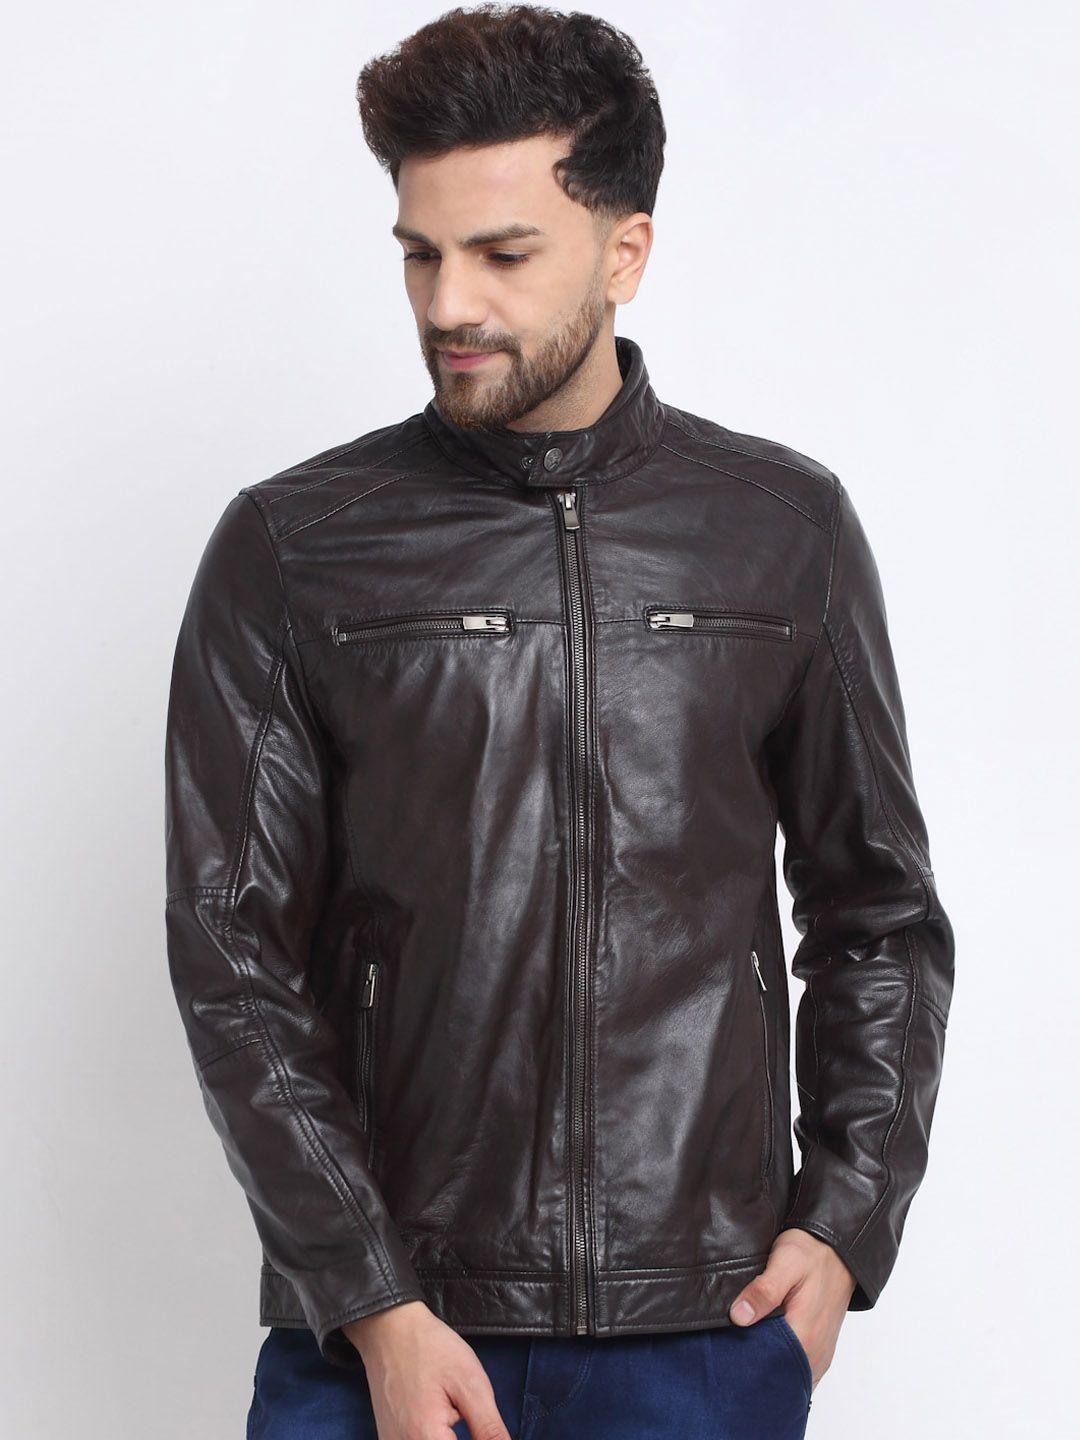 teakwood-leathers-men-leather-water-resistant-biker-jacket